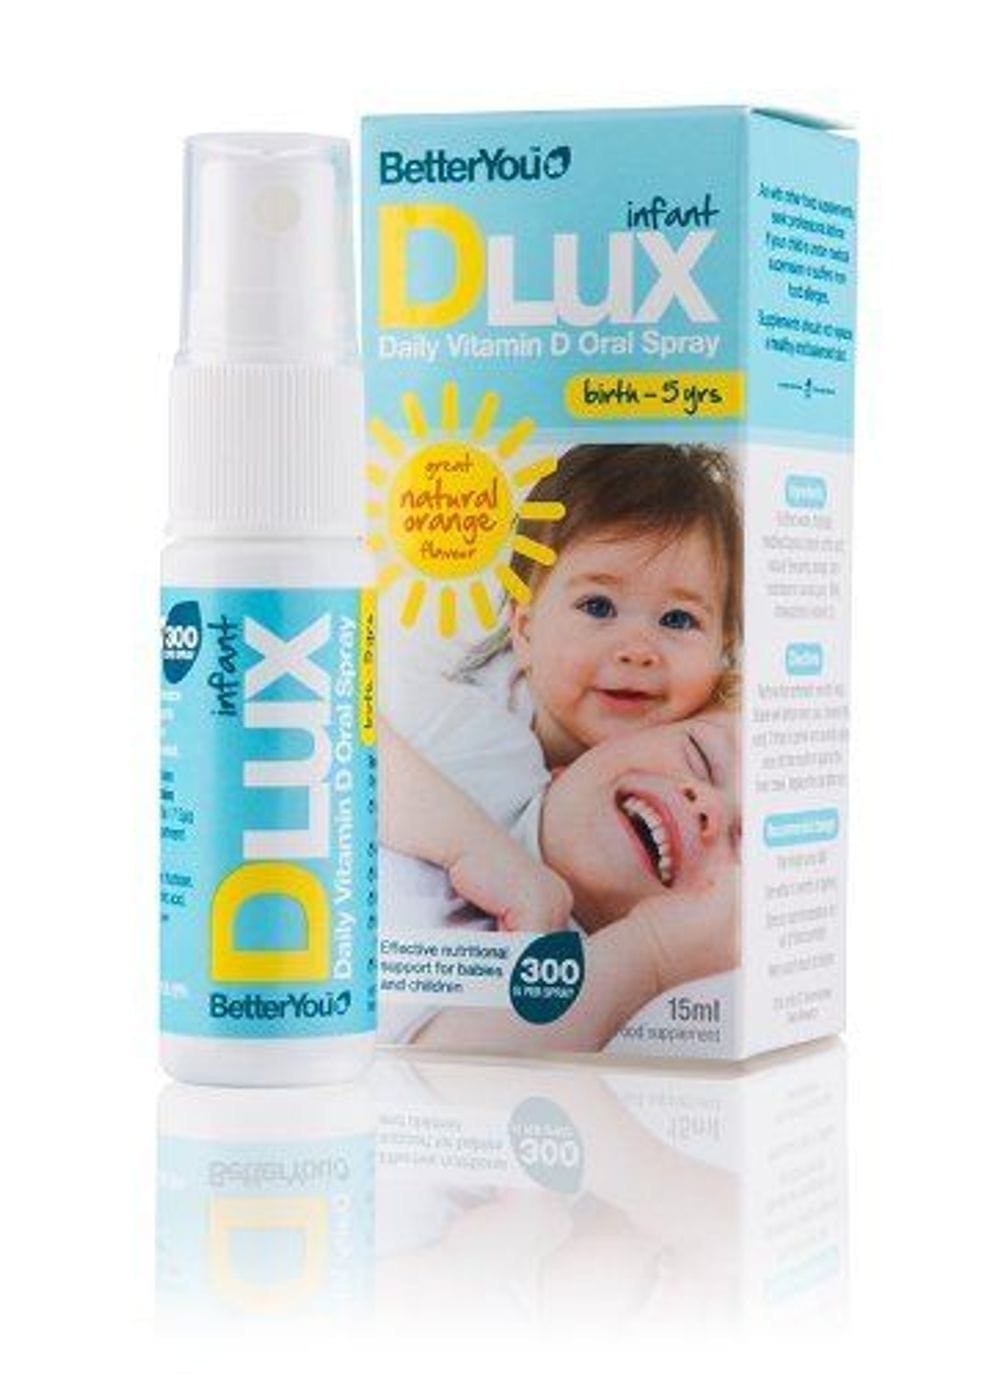 Better You D Lux Infant Vitamin D Oral Spray 15ml - 400iu TapClickBuy